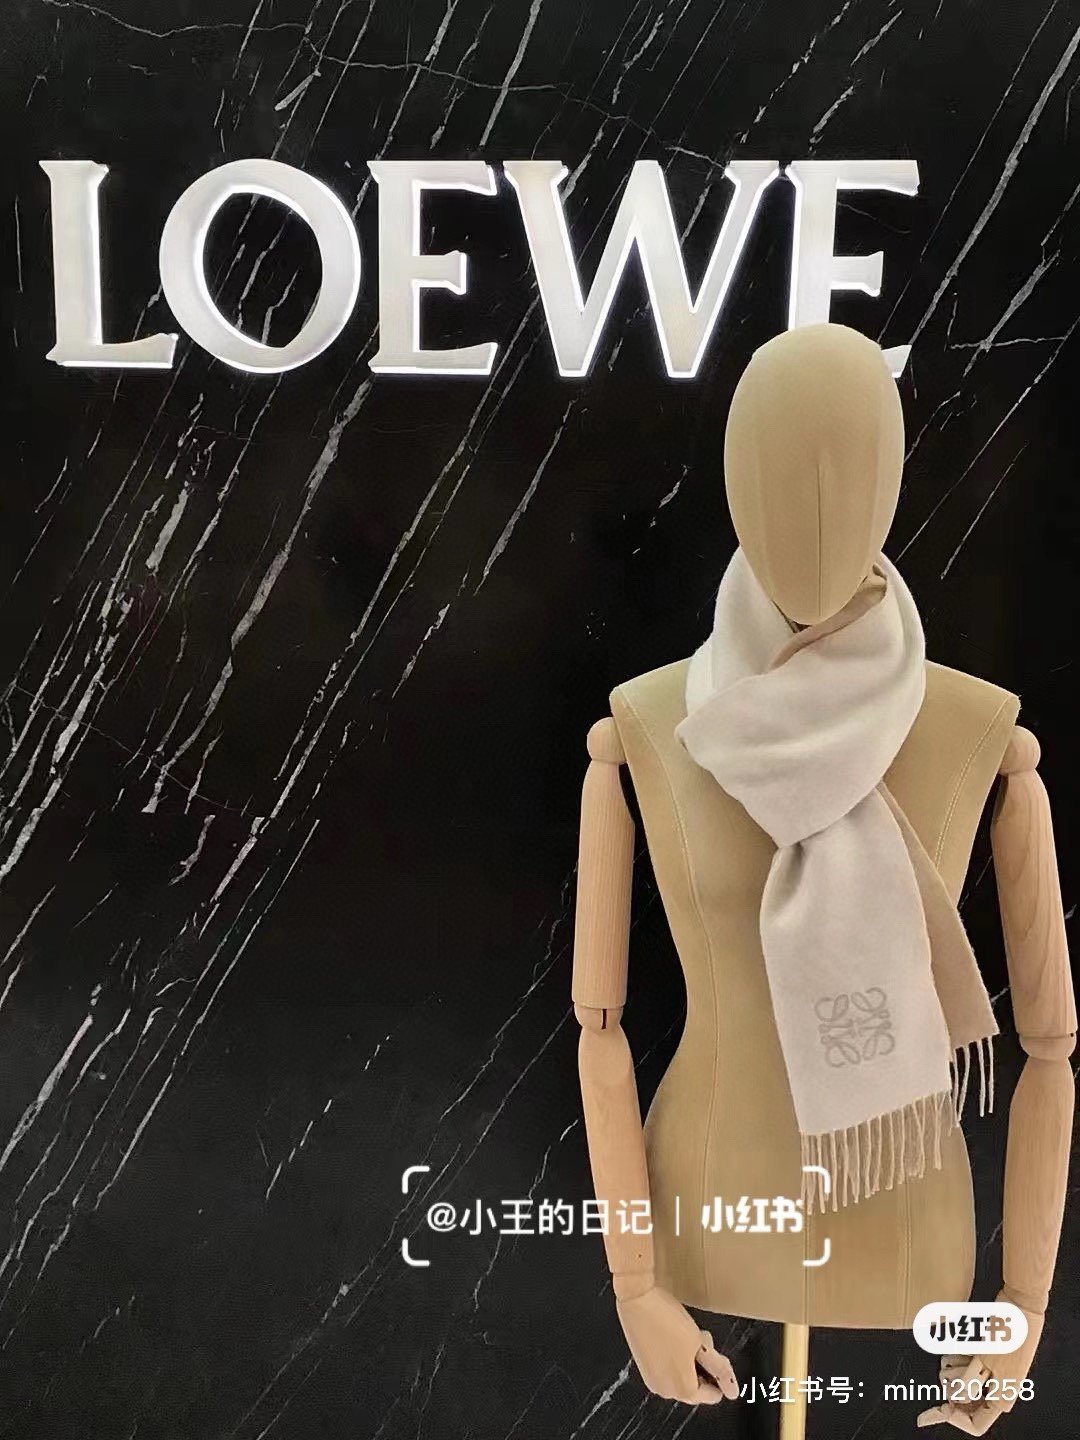 Loewe罗意威难得一见的温柔配色低调又不失优雅重点推荐双面配色一条围巾两种风格搭配高级舒适时髦气质名小